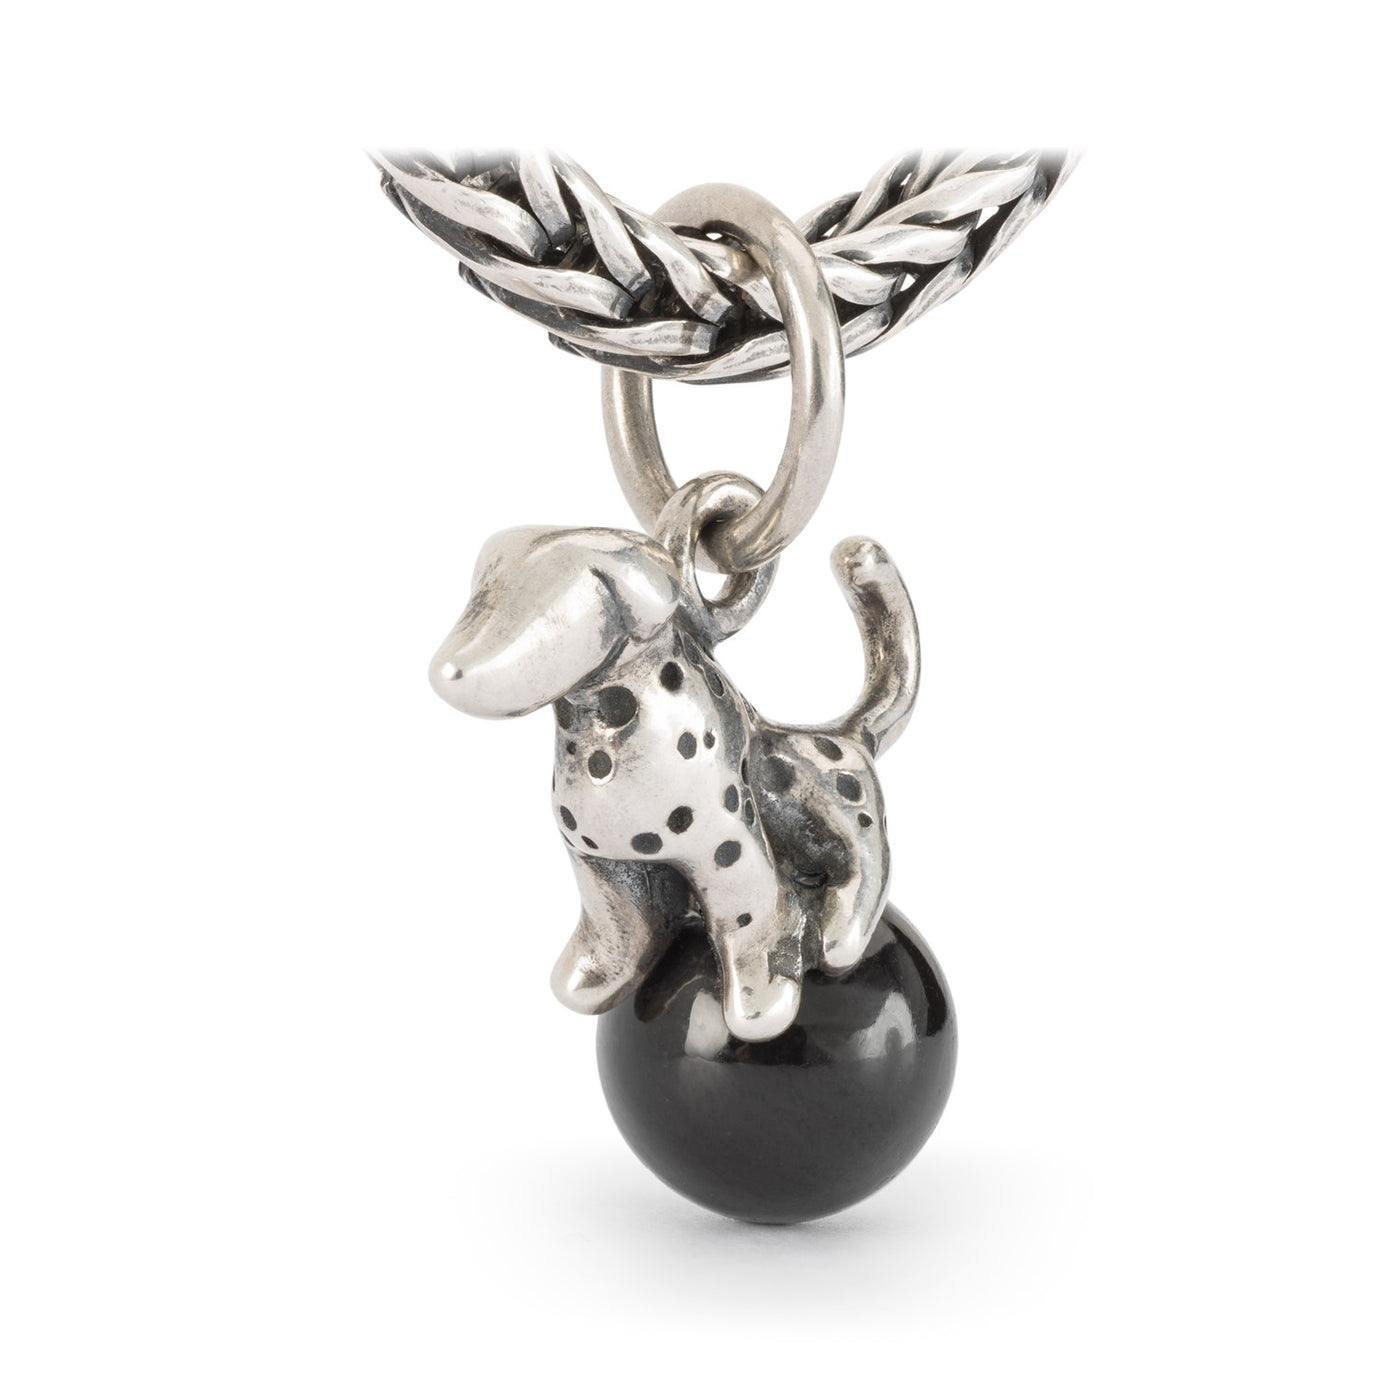 Jewellery silver pendant of a dalmation dog on a ball of Black Onyx gemstone.